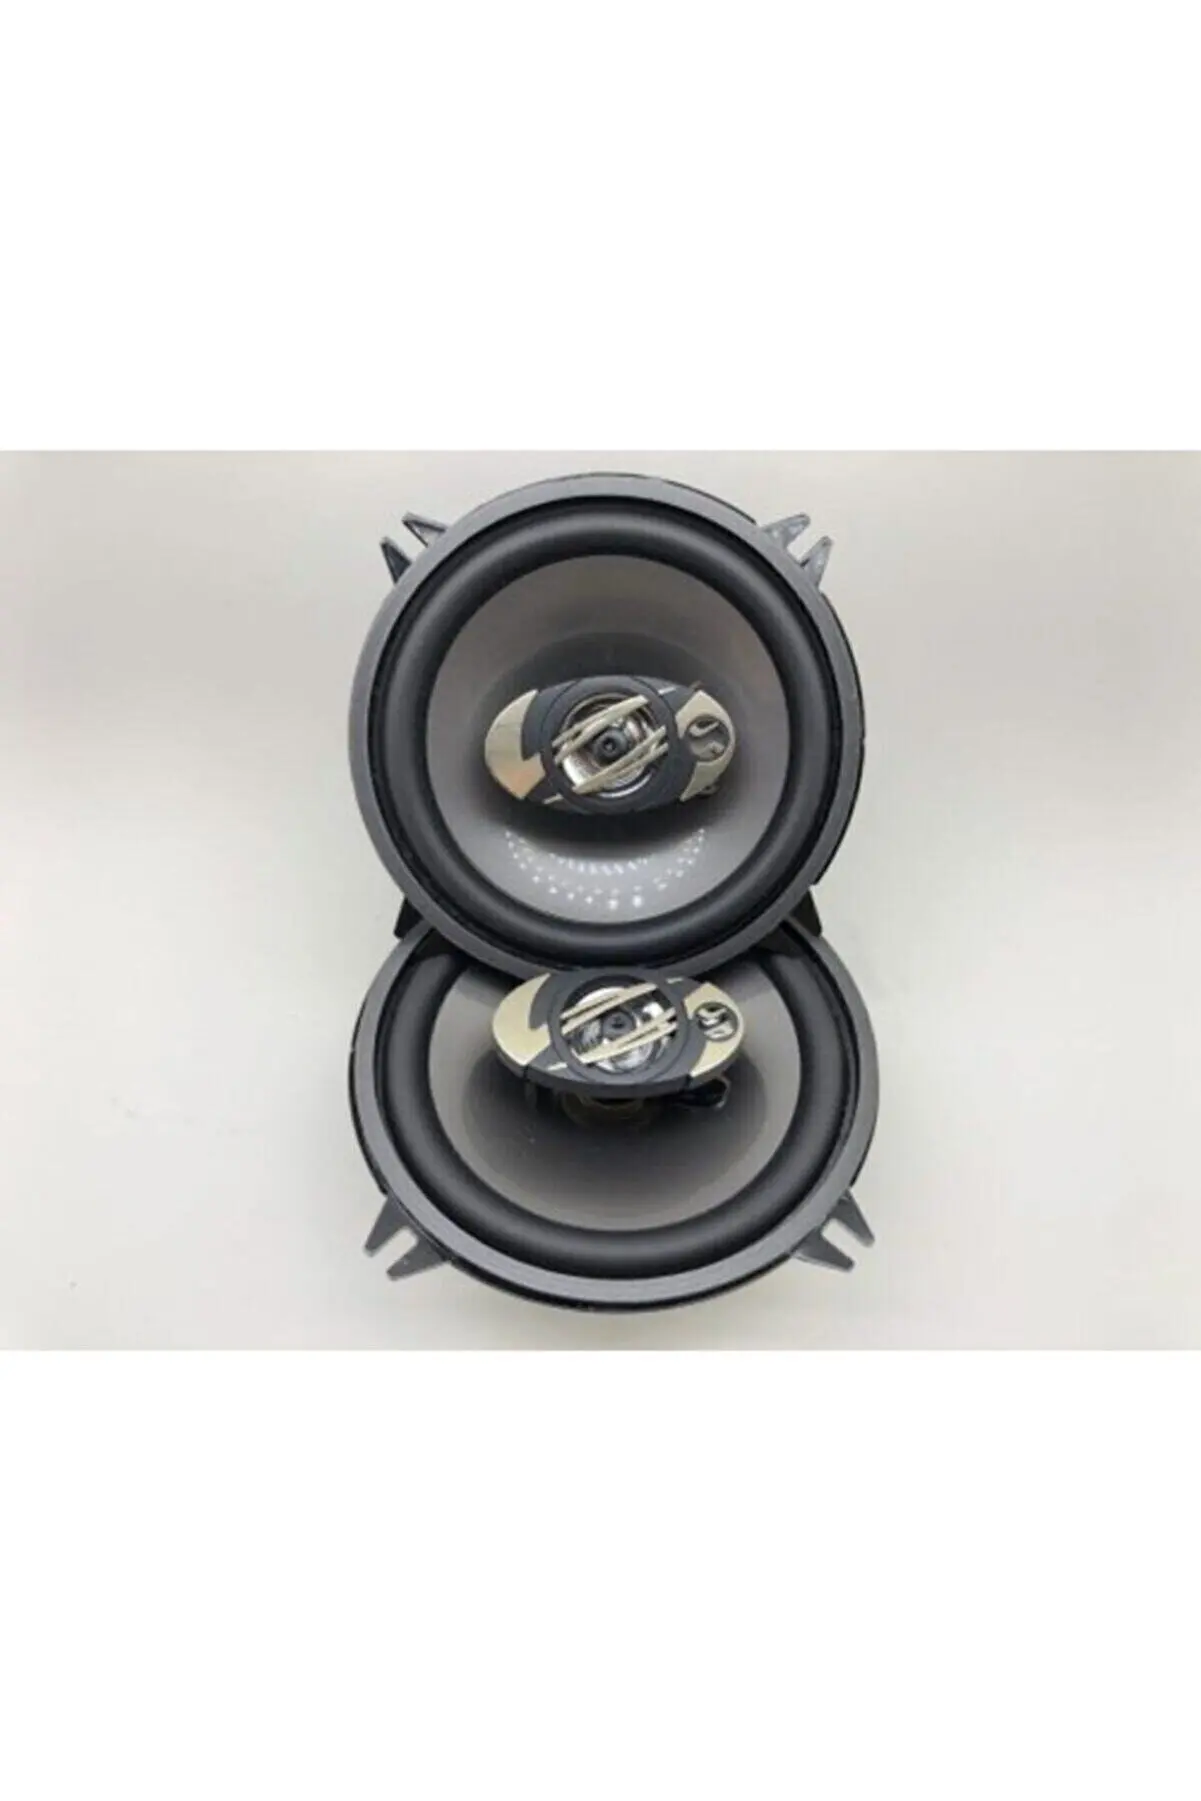 DRIVETEC 550w 13cm Car Speaker High Sound Quality Amplifier Tweeter Set of 2 Bass Treble Door Column enlarge